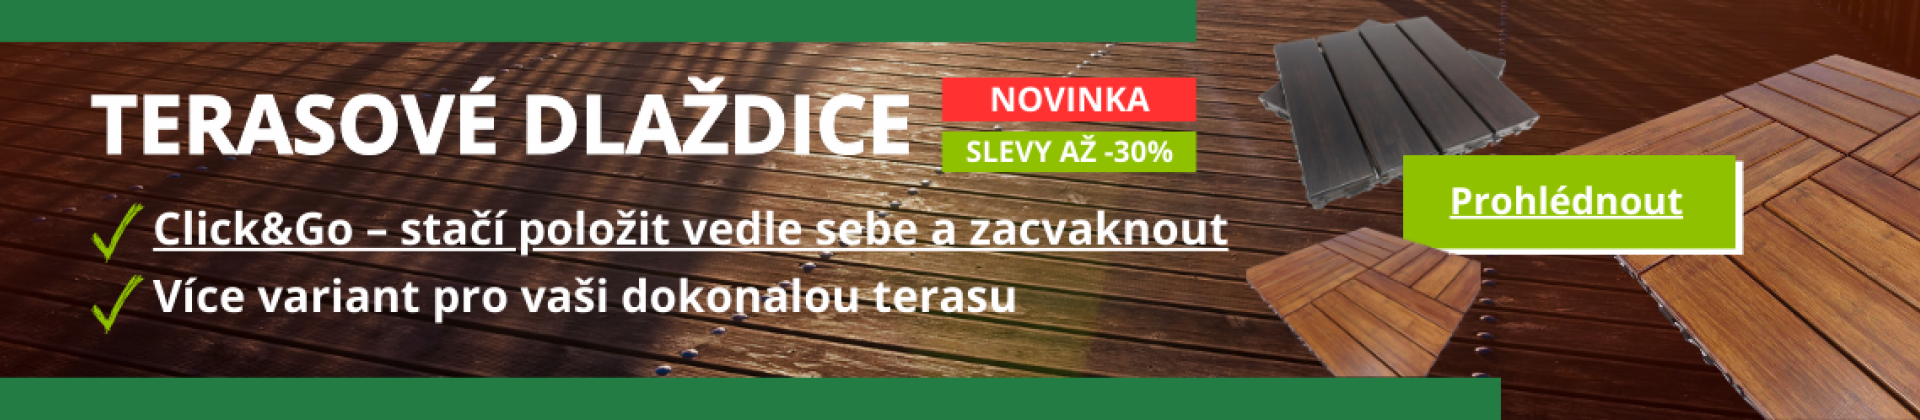 ispas-banner-terasove-dlazdice